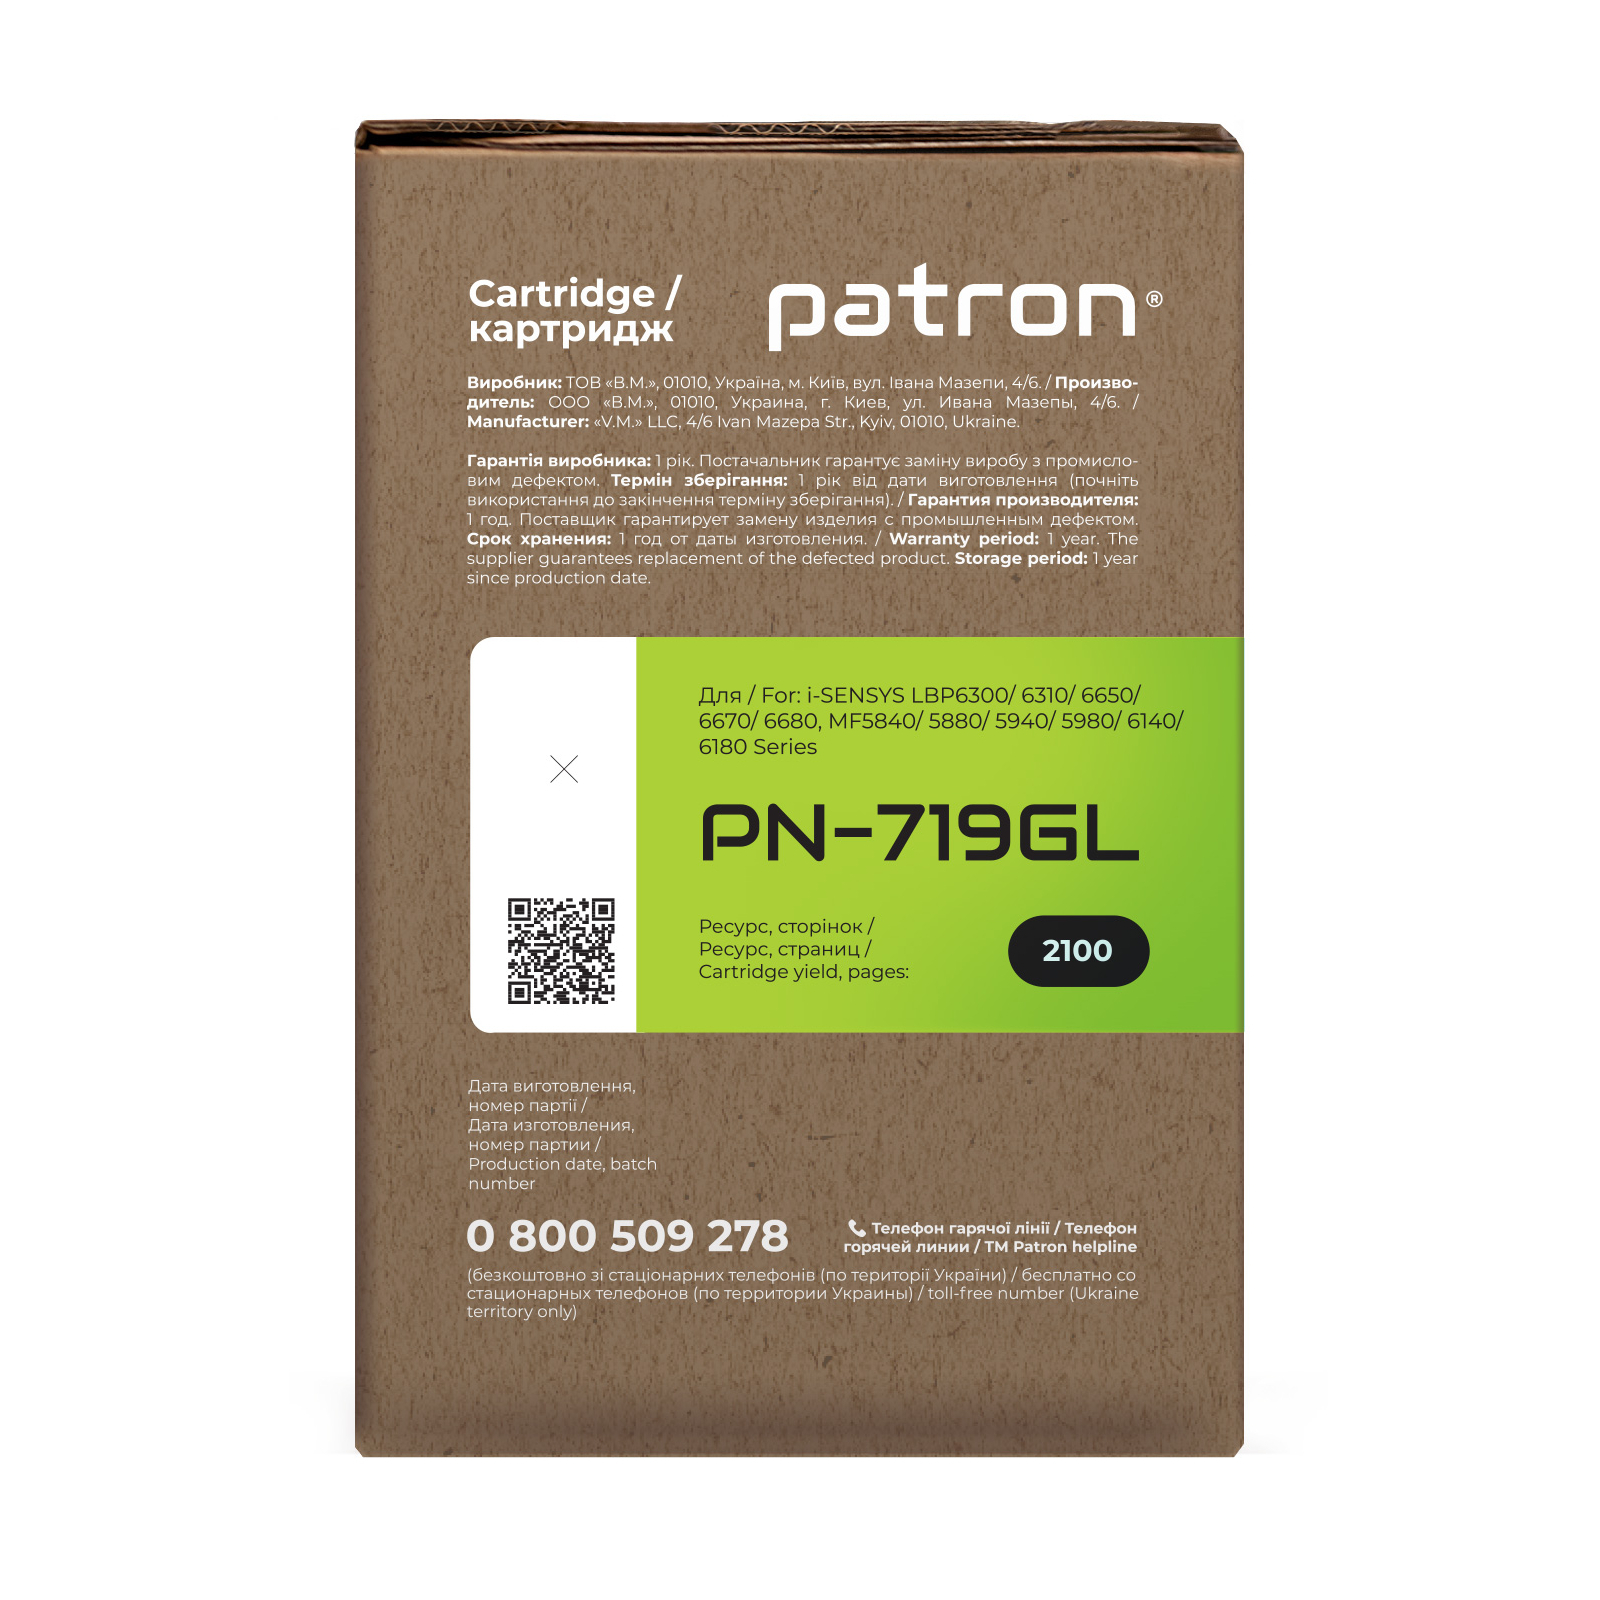 Картридж Patron CANON 719 GREEN Label (PN-719GL) изображение 3